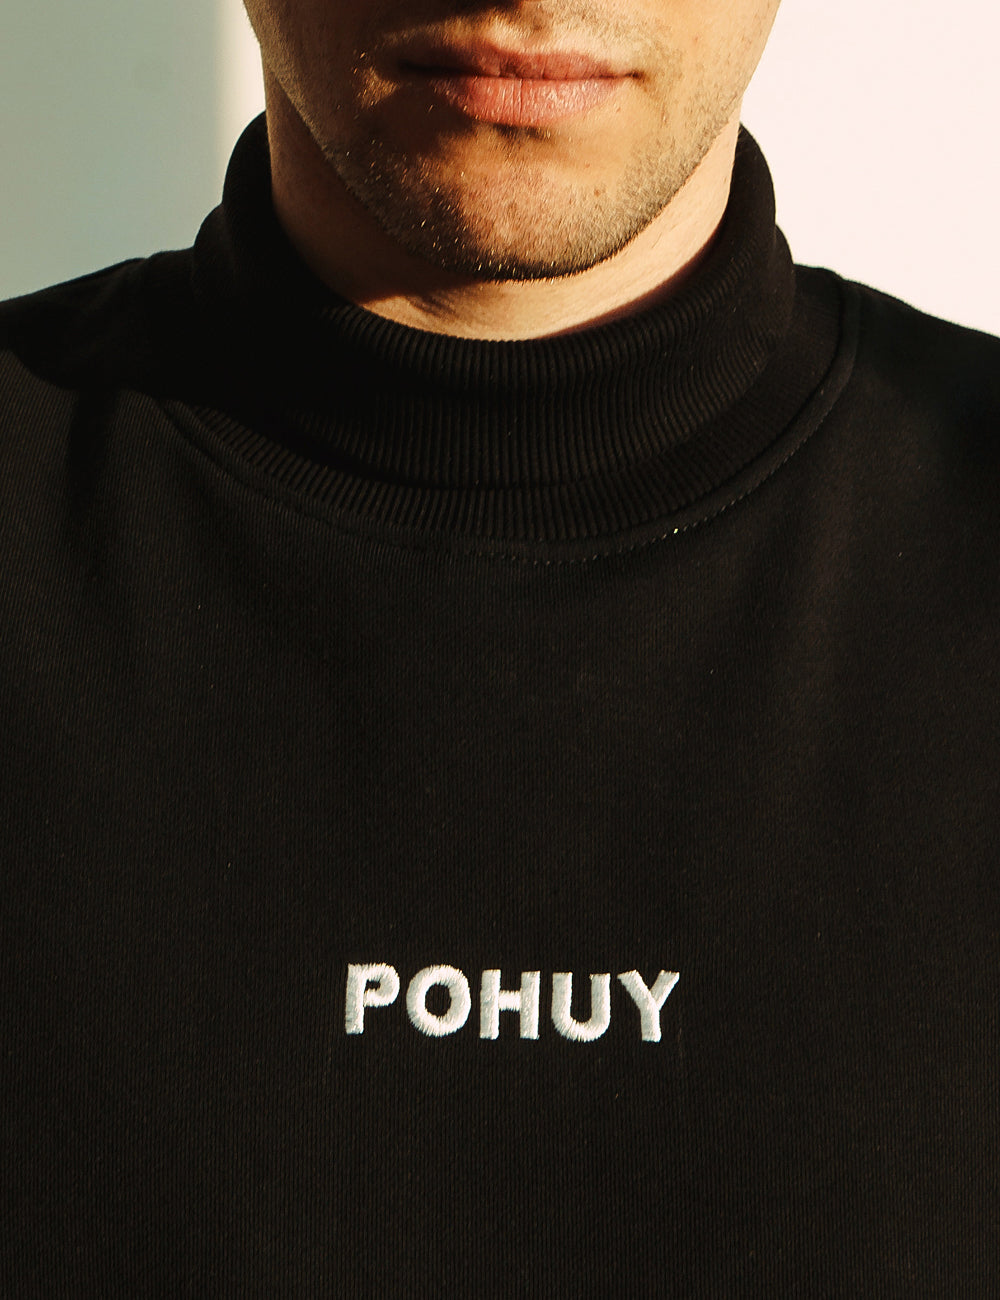 Sweatshirt black minimal POHUY